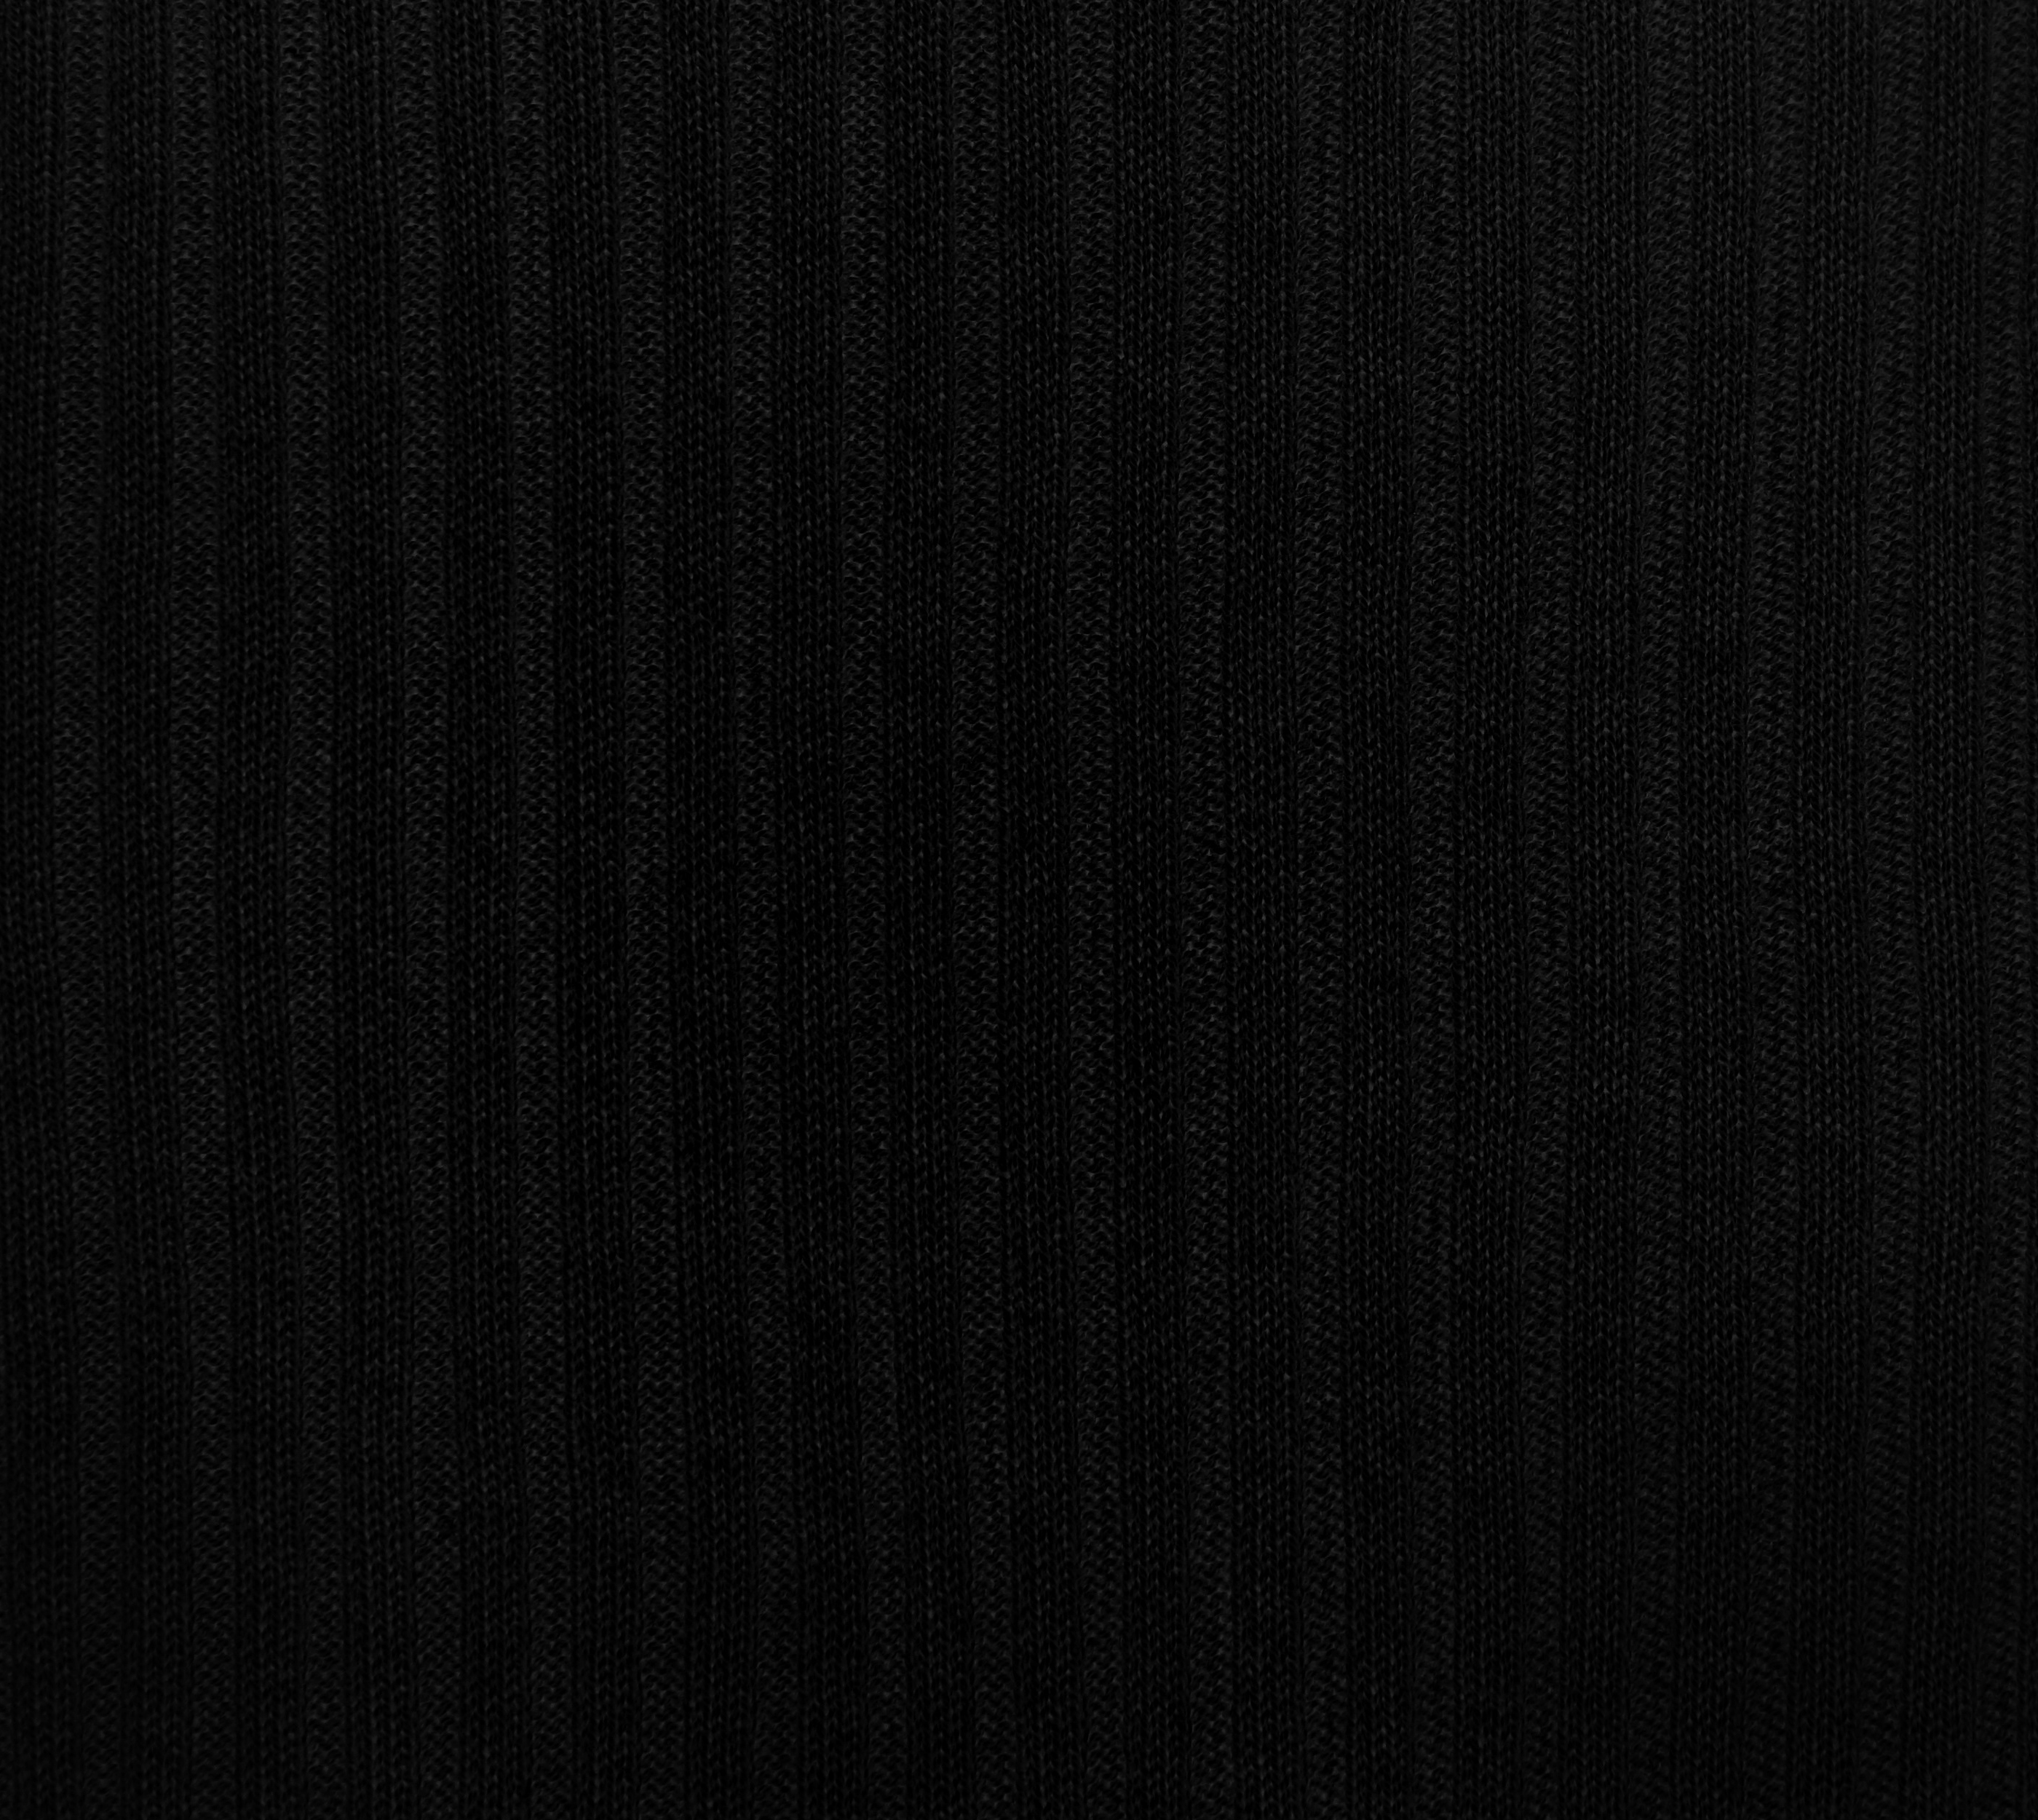 Black Cotton Background Texture By Llexandro On Deviantart